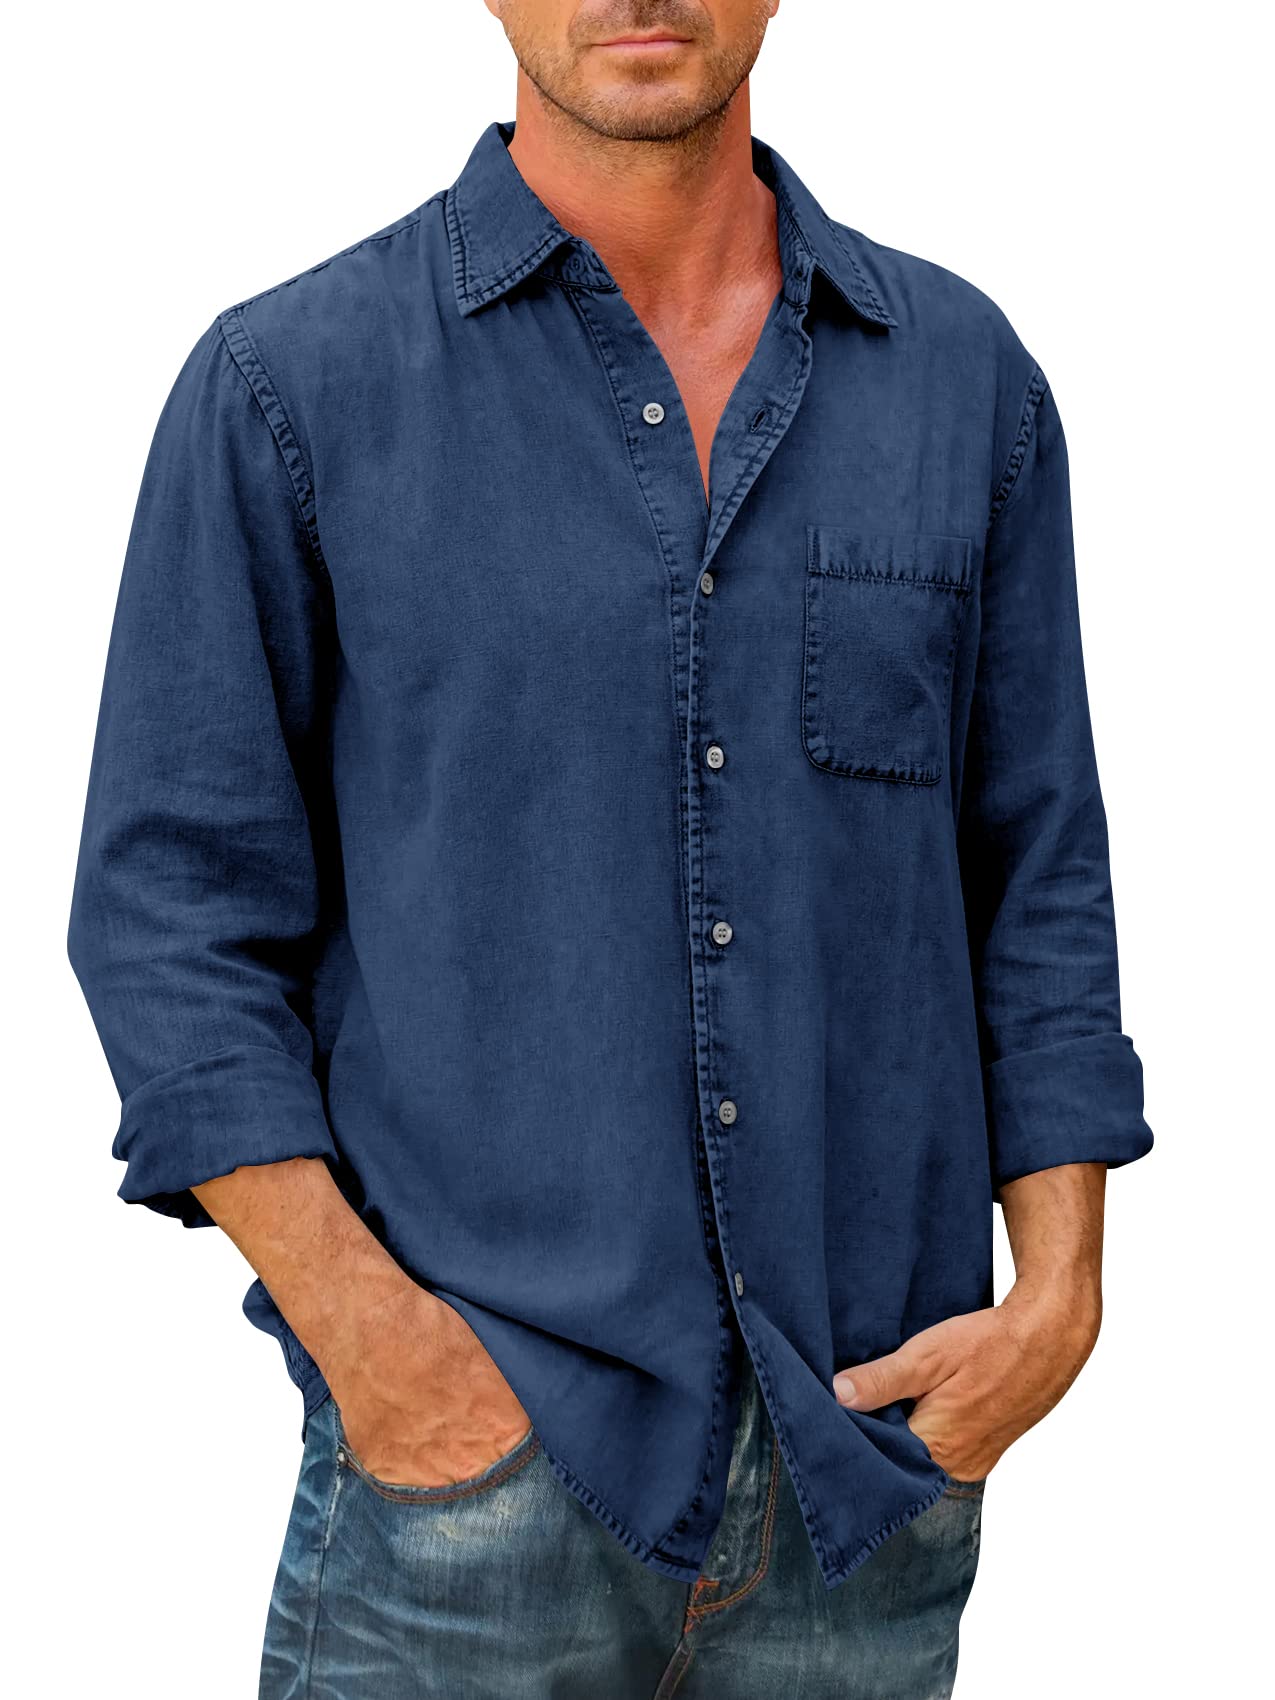 Men's High Quality Denim Shirts Long Sleeve-BUY 1 GET 1 FREE-8